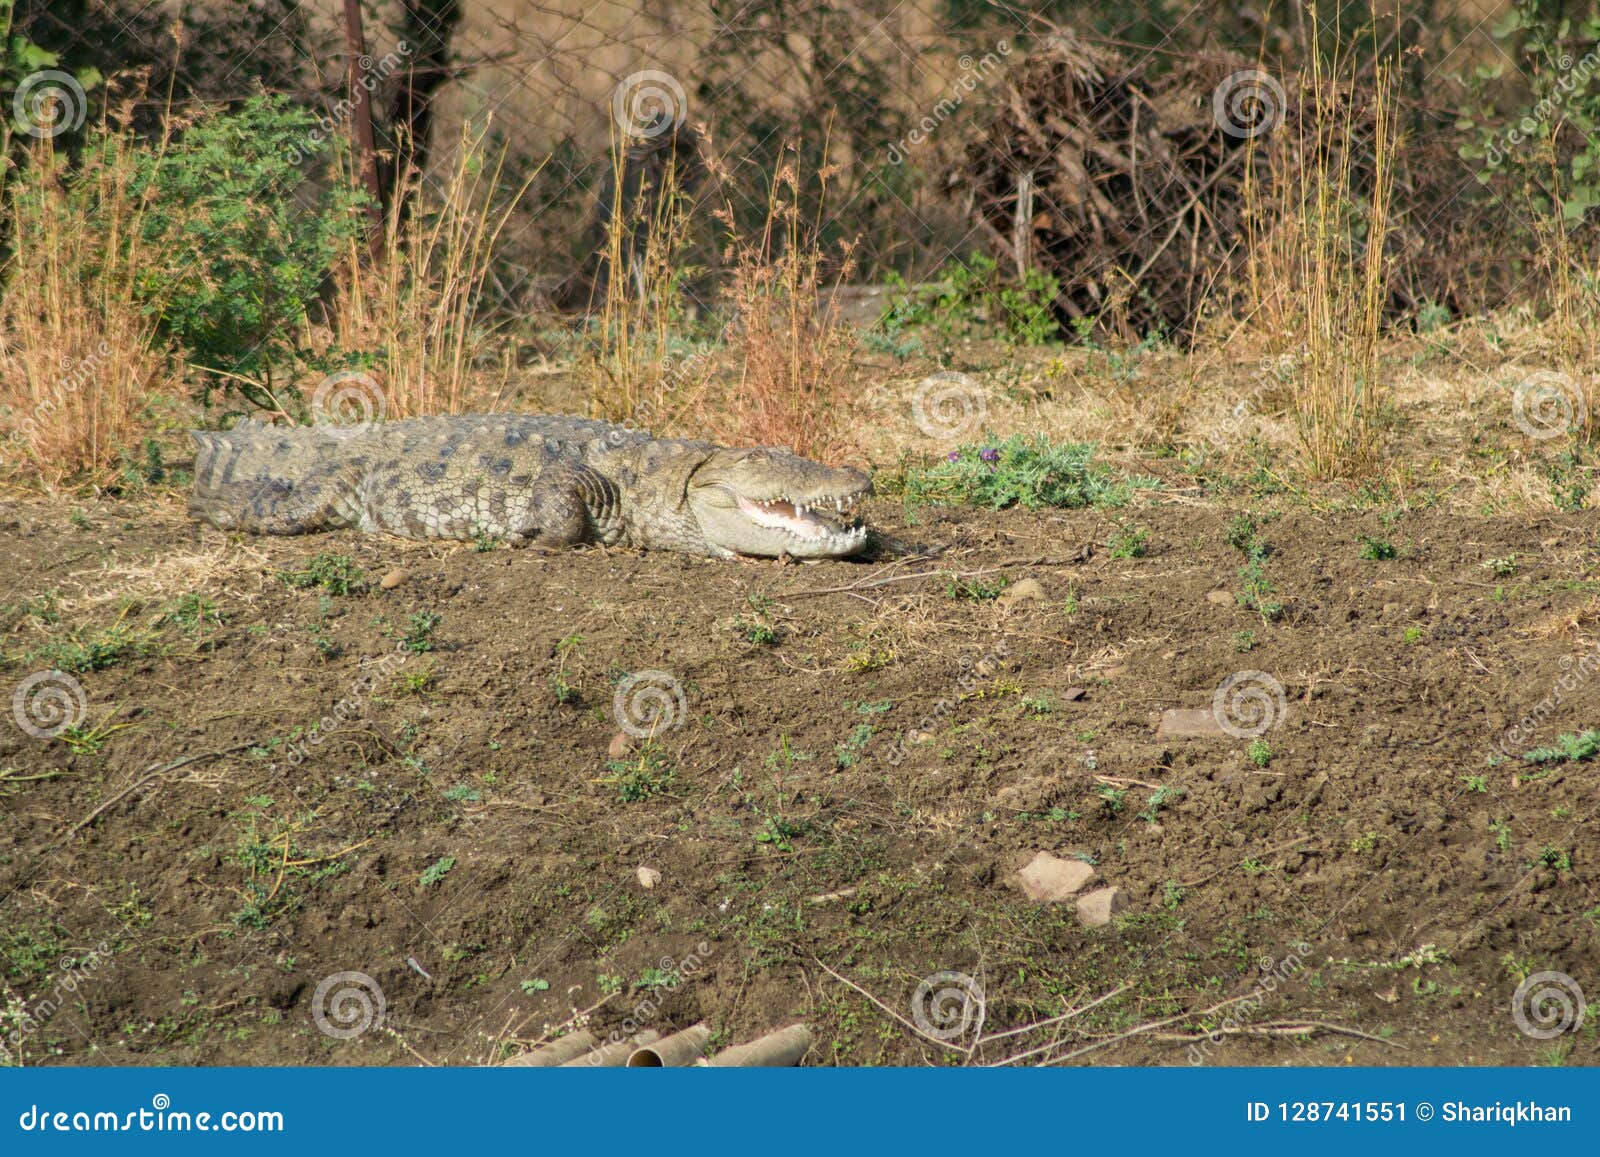 marsh or mugger crocodile